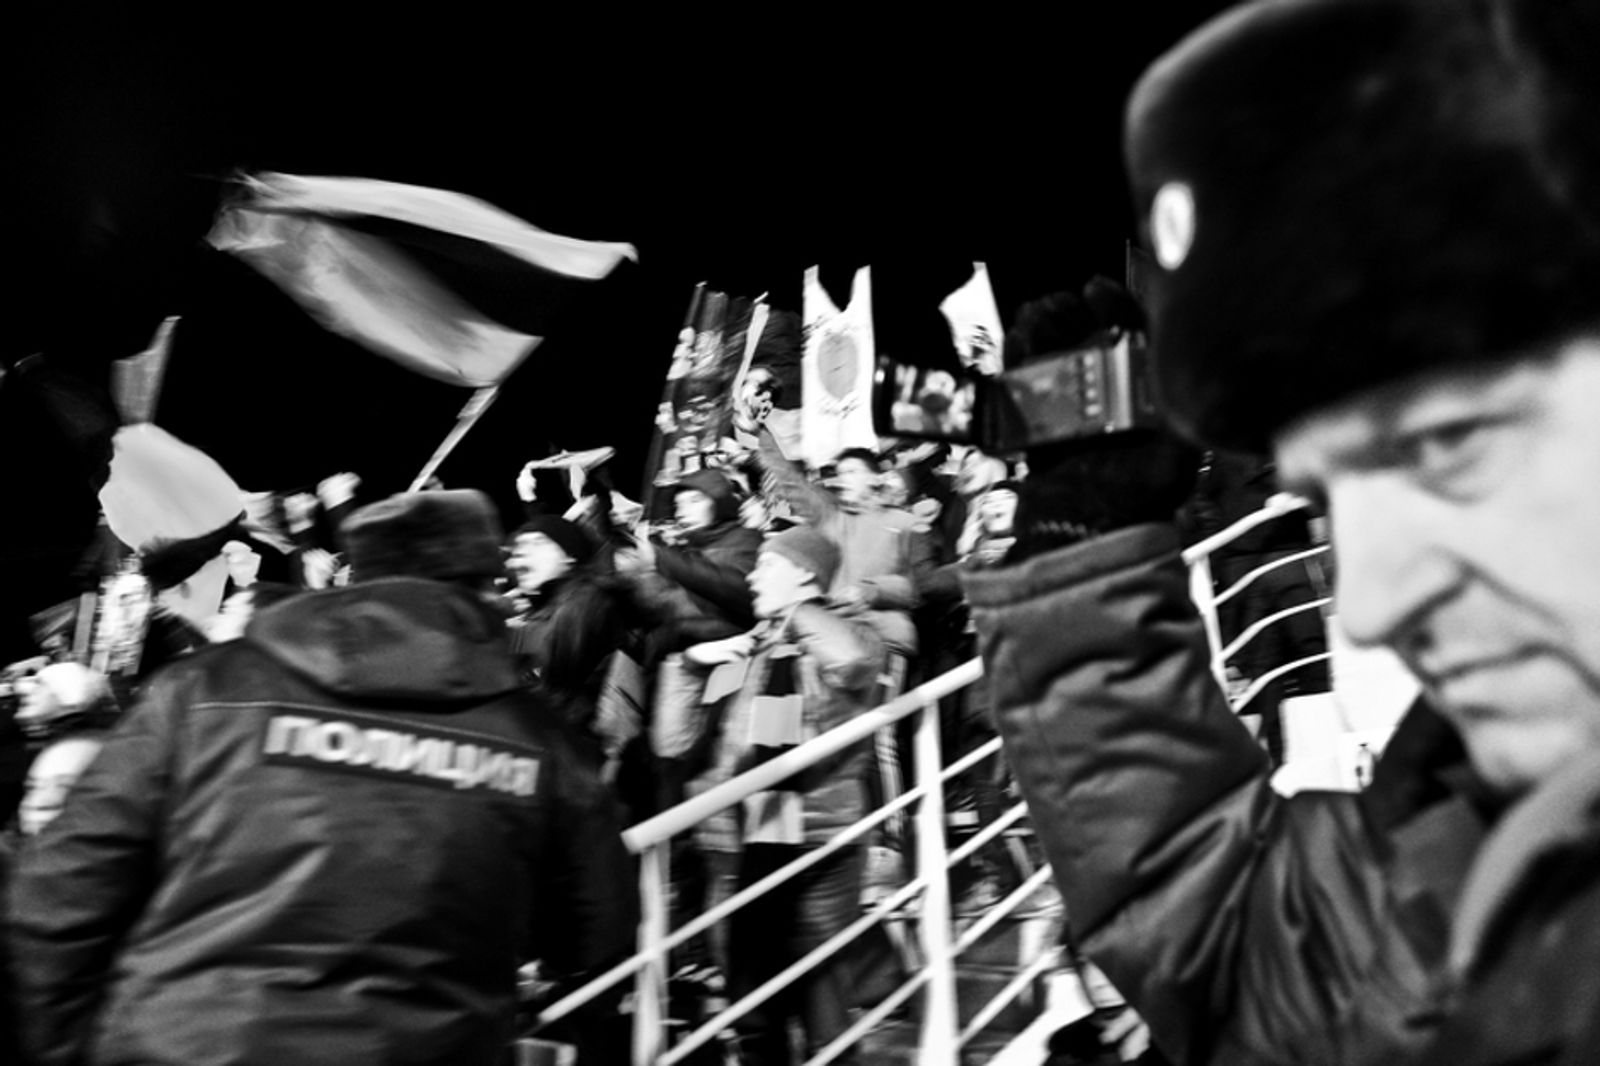 © Pavel Volkov - Police filmed cheering football fans to identify offenders